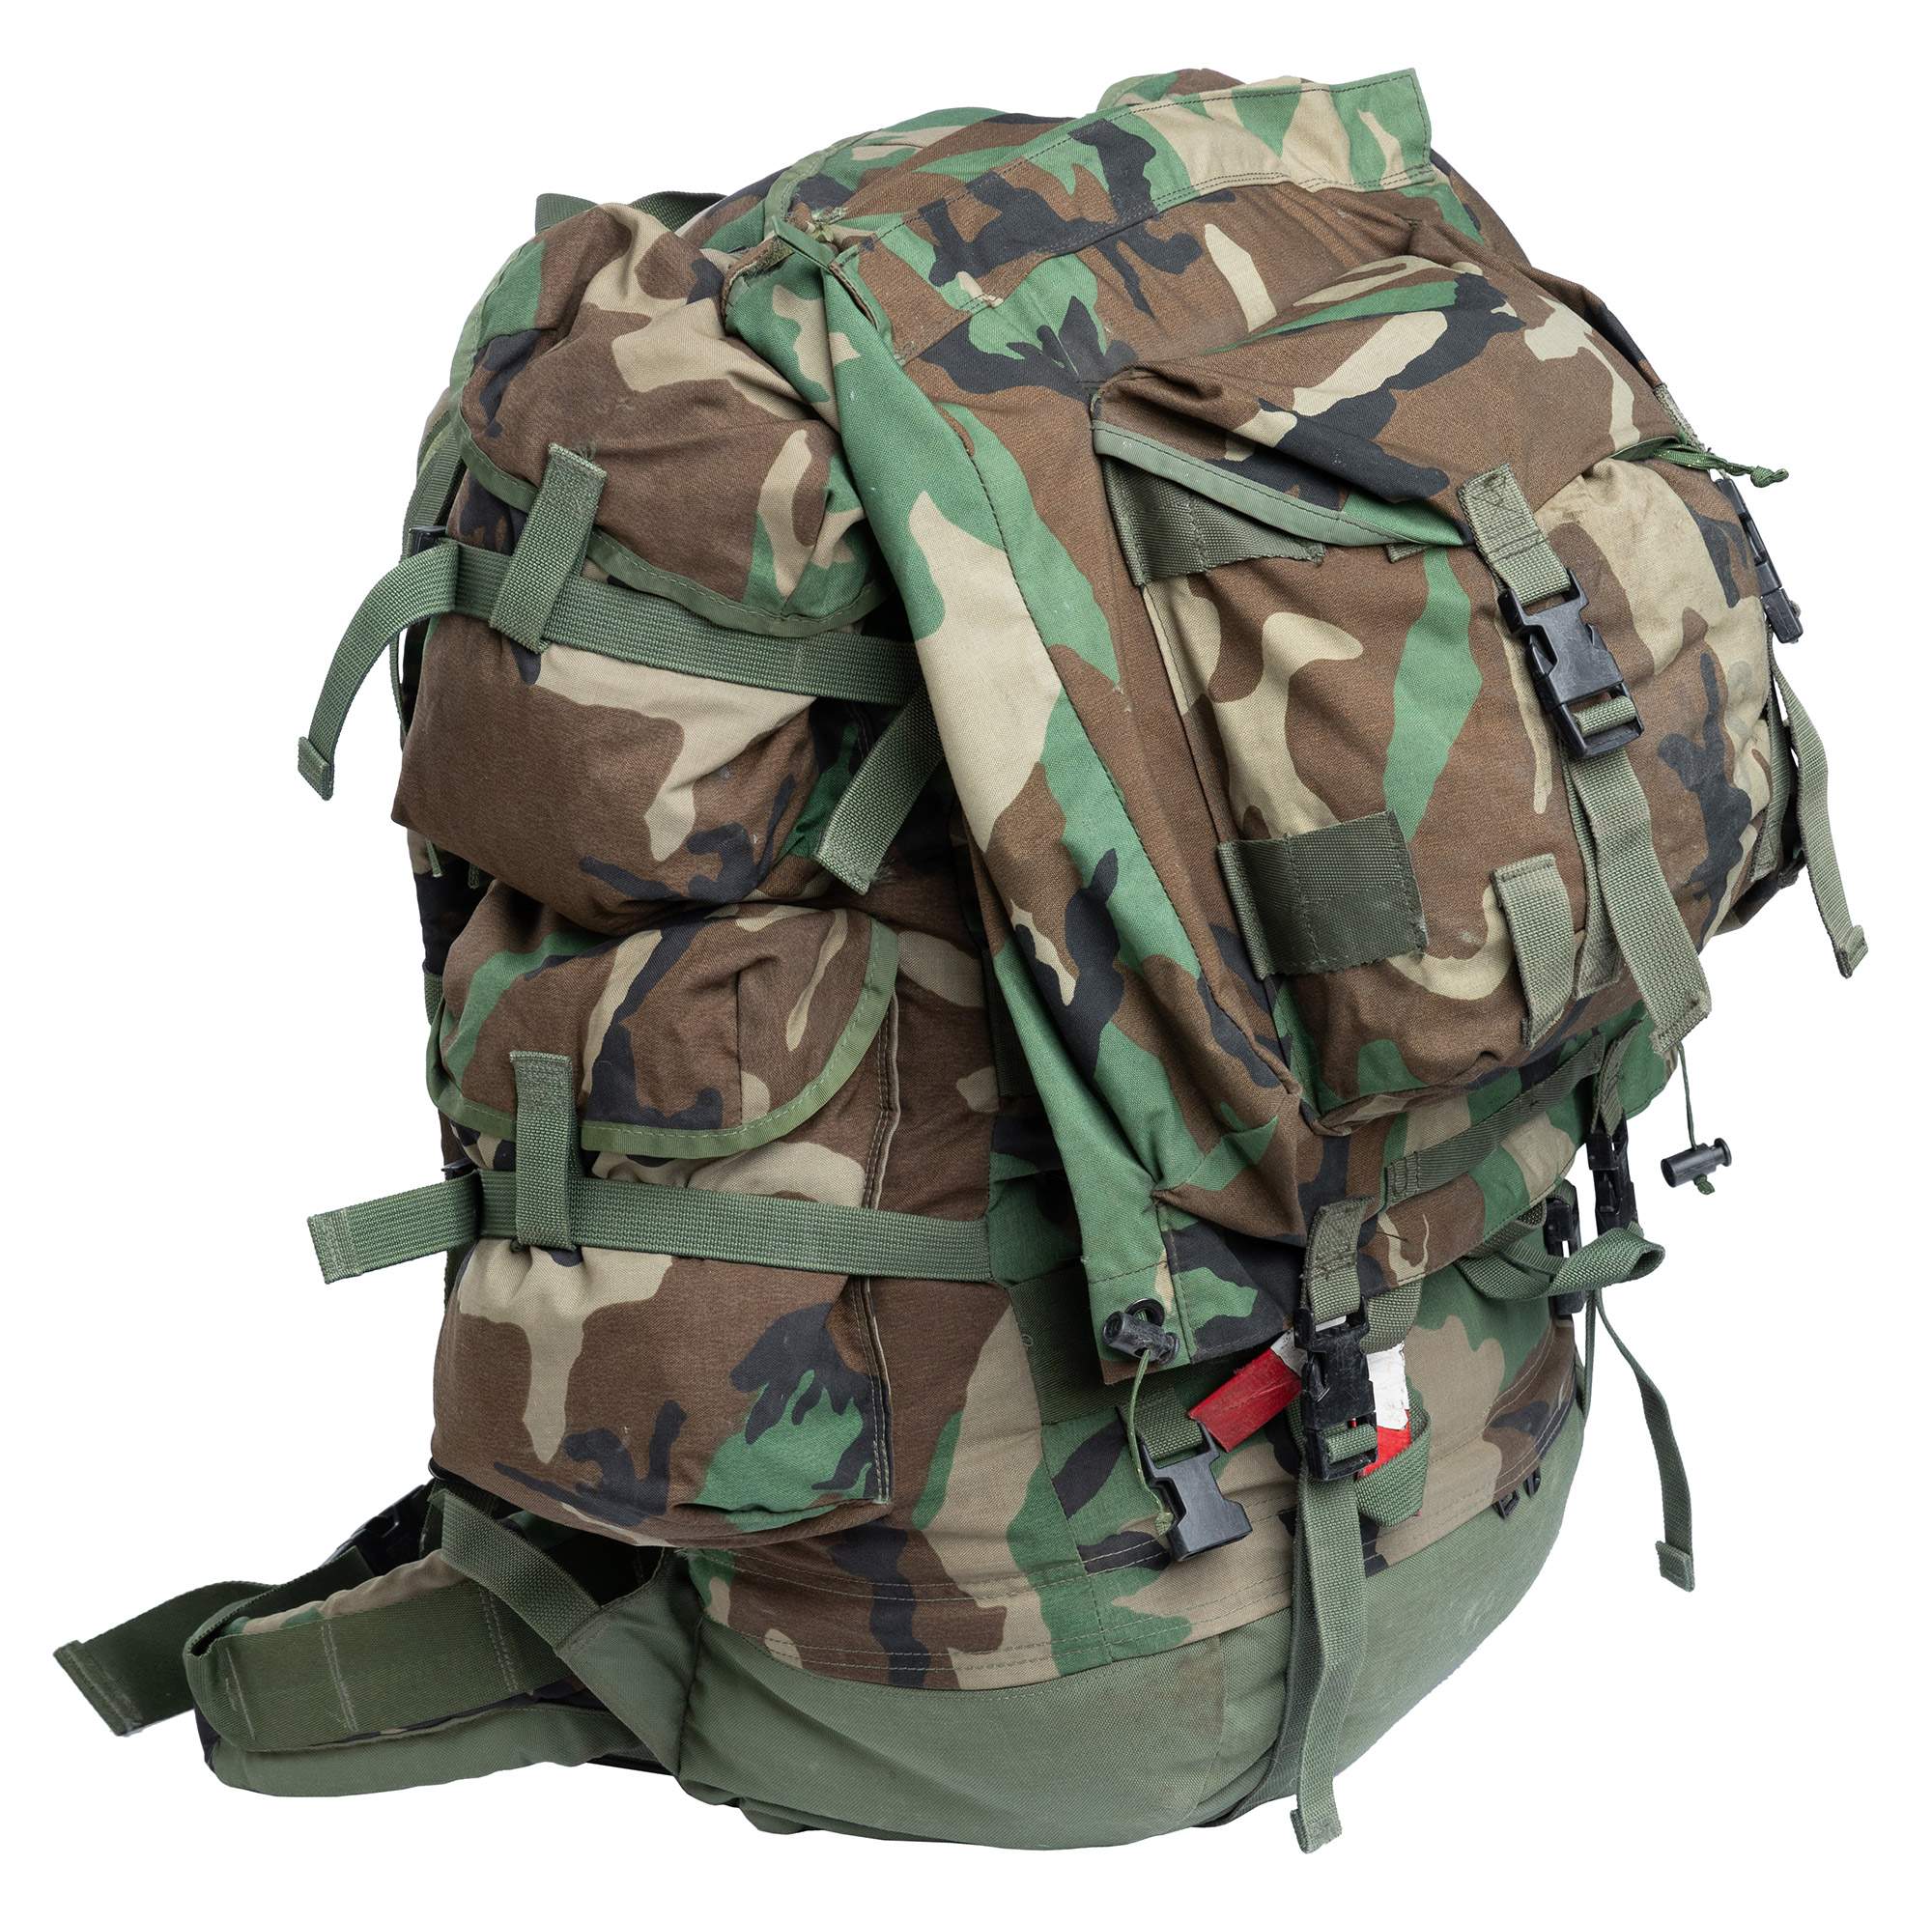 US CFP-90 rucksack with day pack, surplus - Varusteleka.com